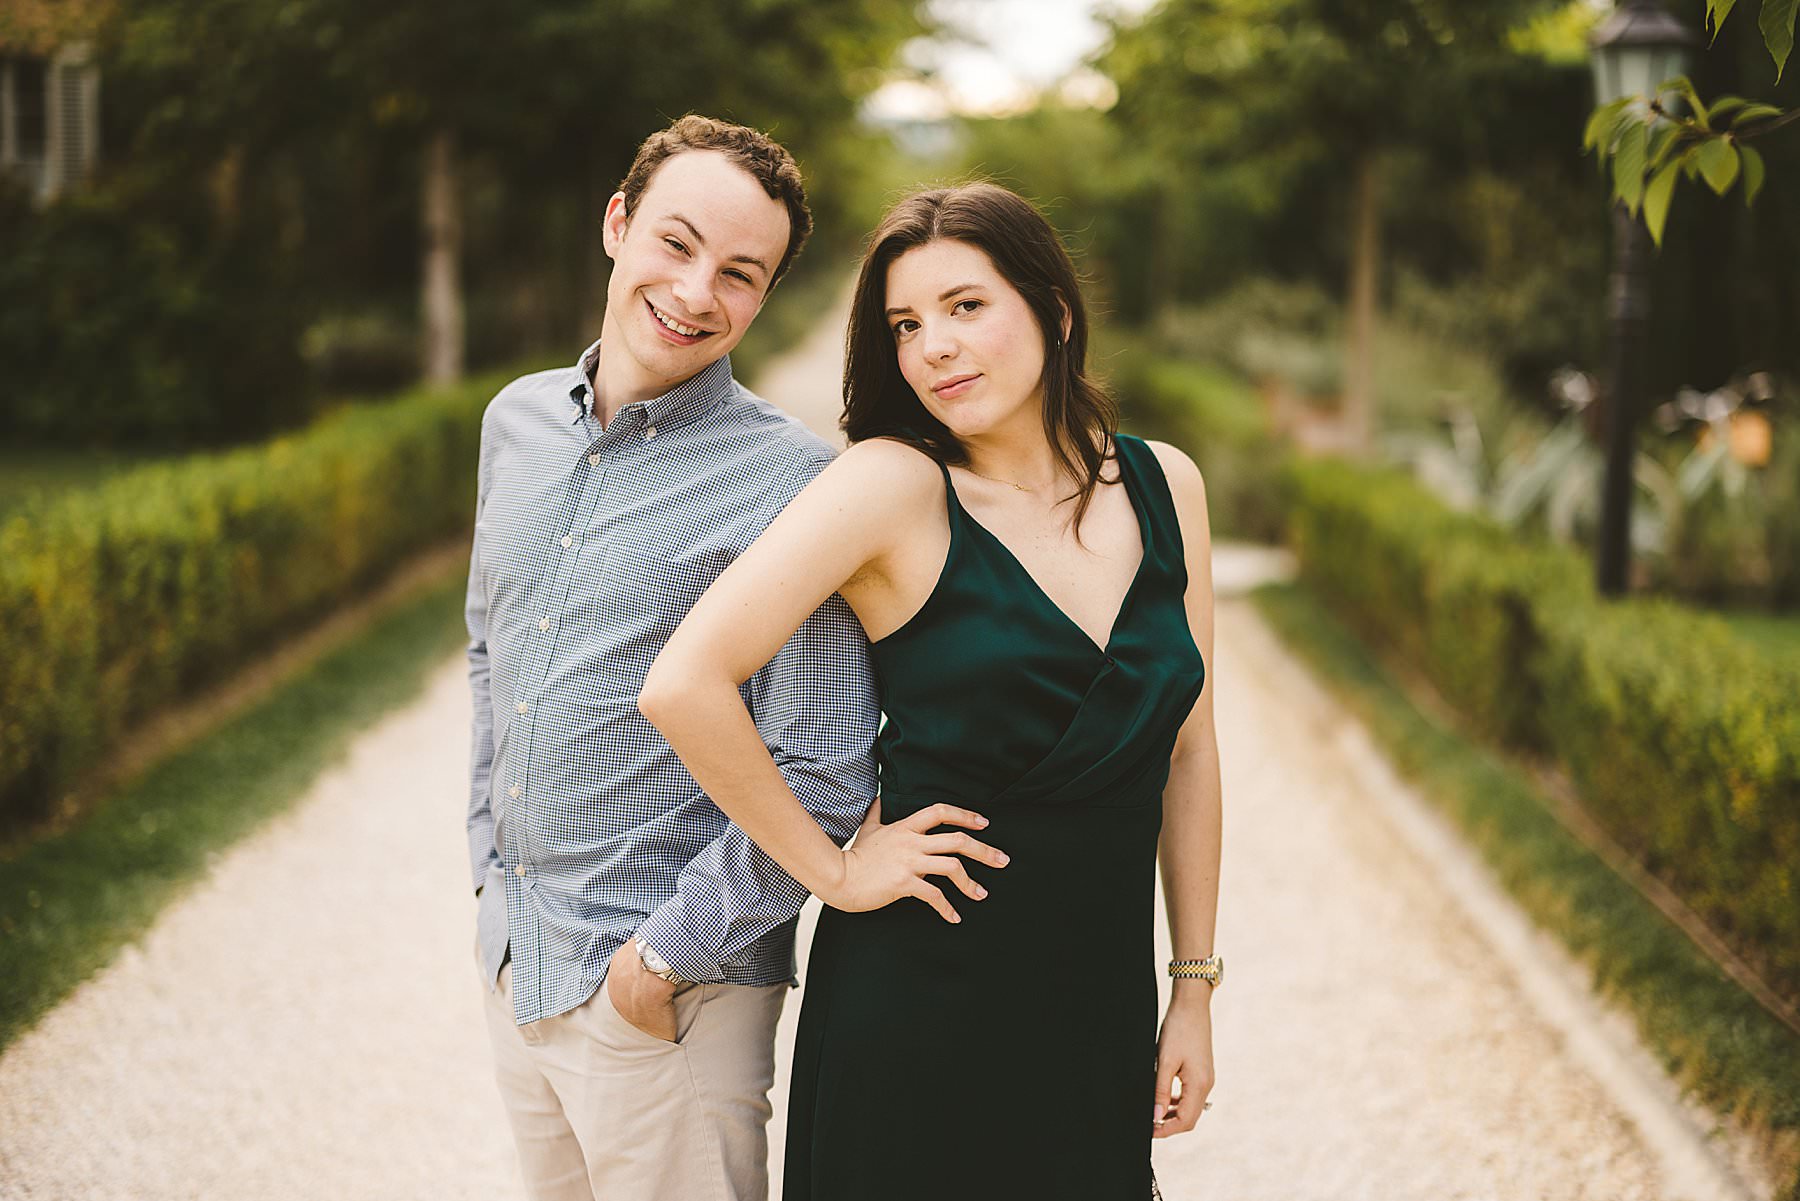 Melanie and Joshua’s lovely engagement photos at Borgo Santo Pietro near Siena